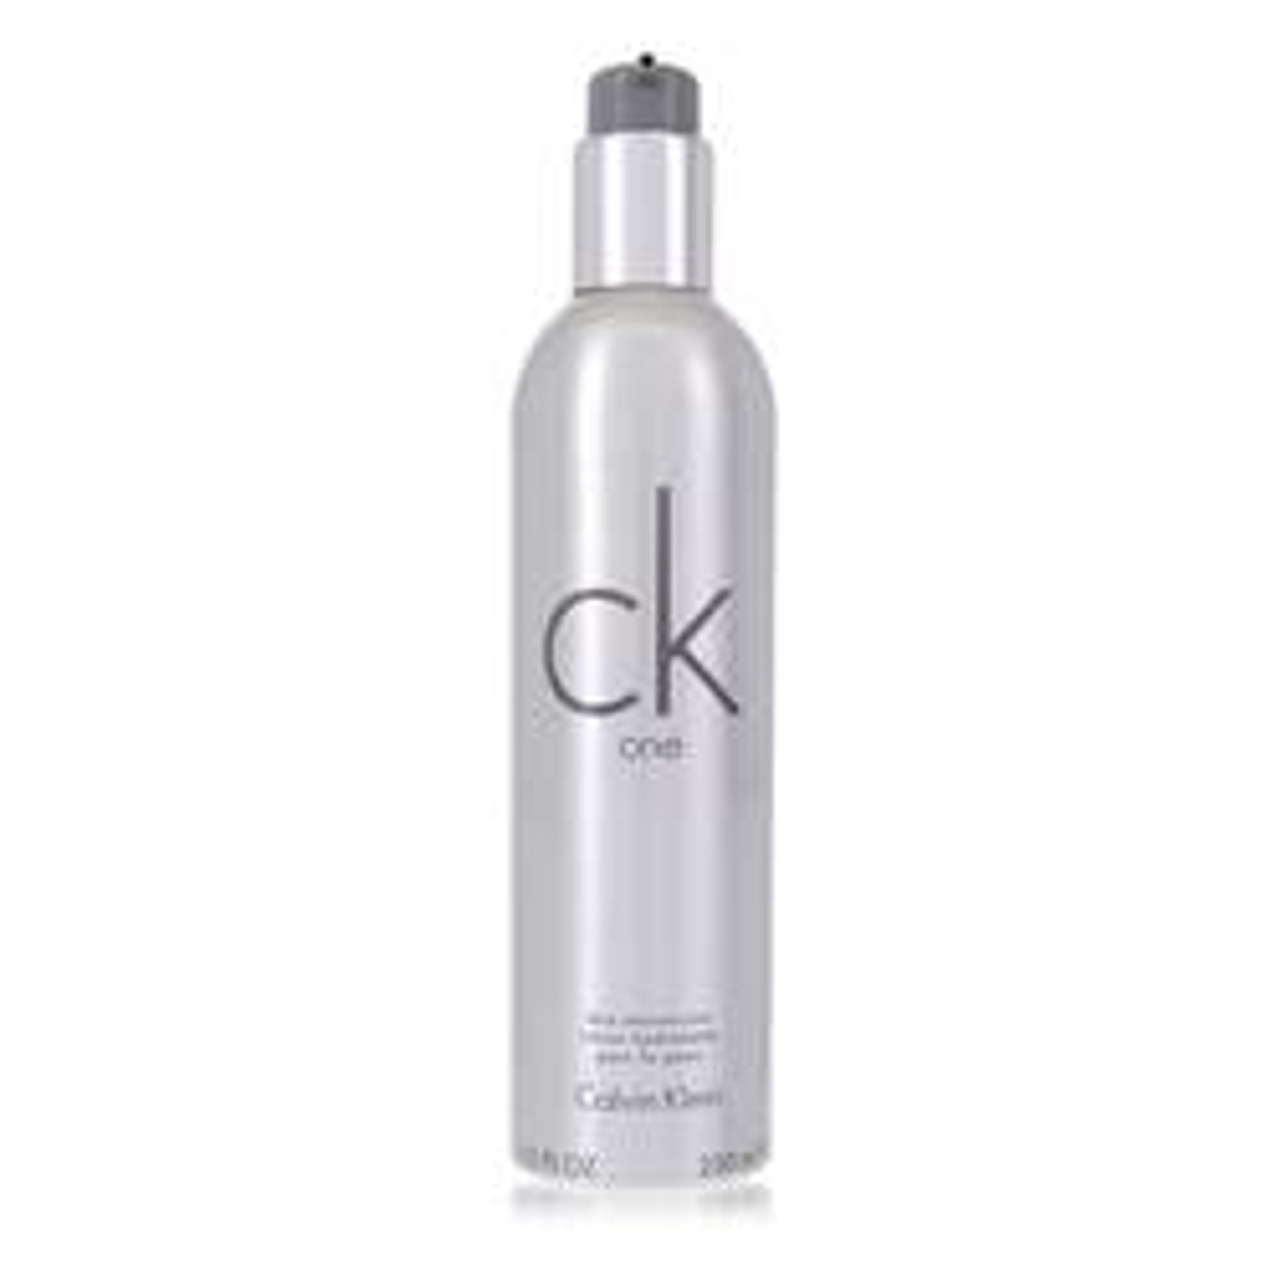 Ck One Perfume By Calvin Klein Body Lotion/ Skin Moisturizer (Unisex) 8.5 oz for Women - *Pre-Order